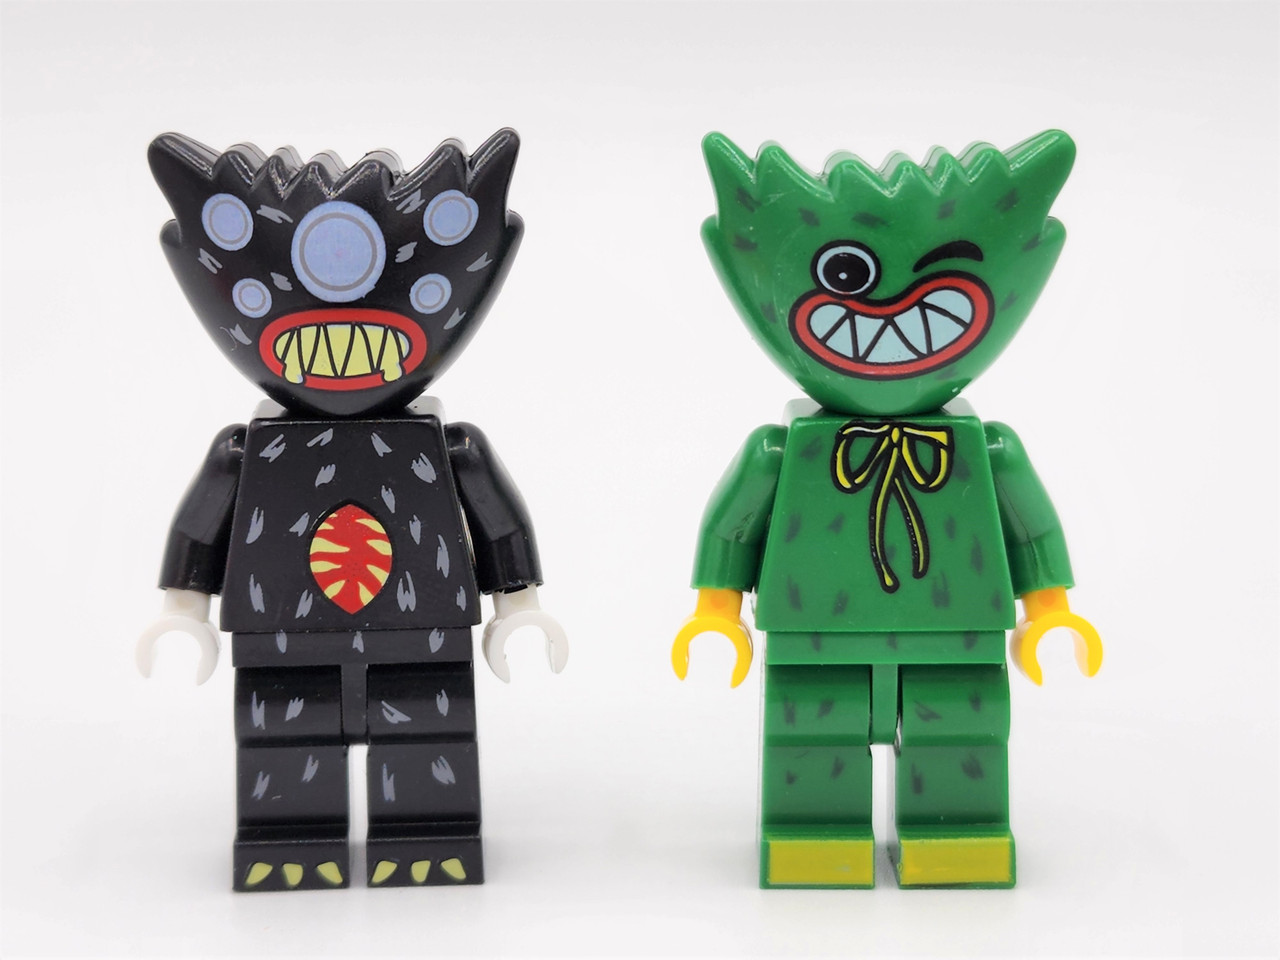 The Batman 2022 Custom Minifigures Set 8pcs - J's Little Things